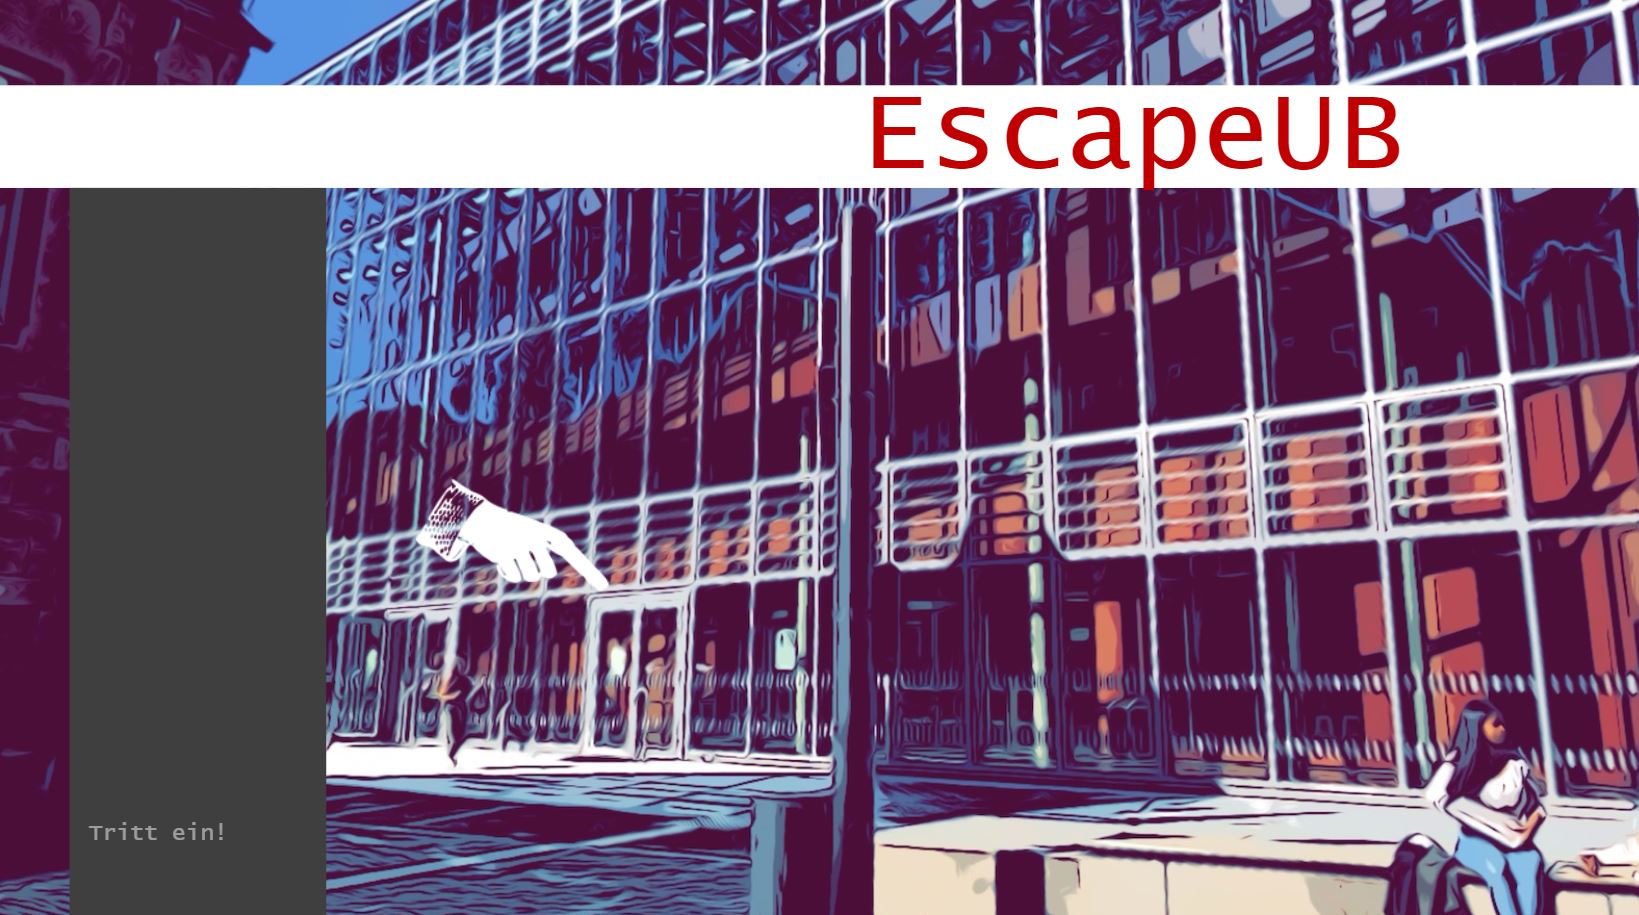 dekoratives Titelbild des Escape-Spiels